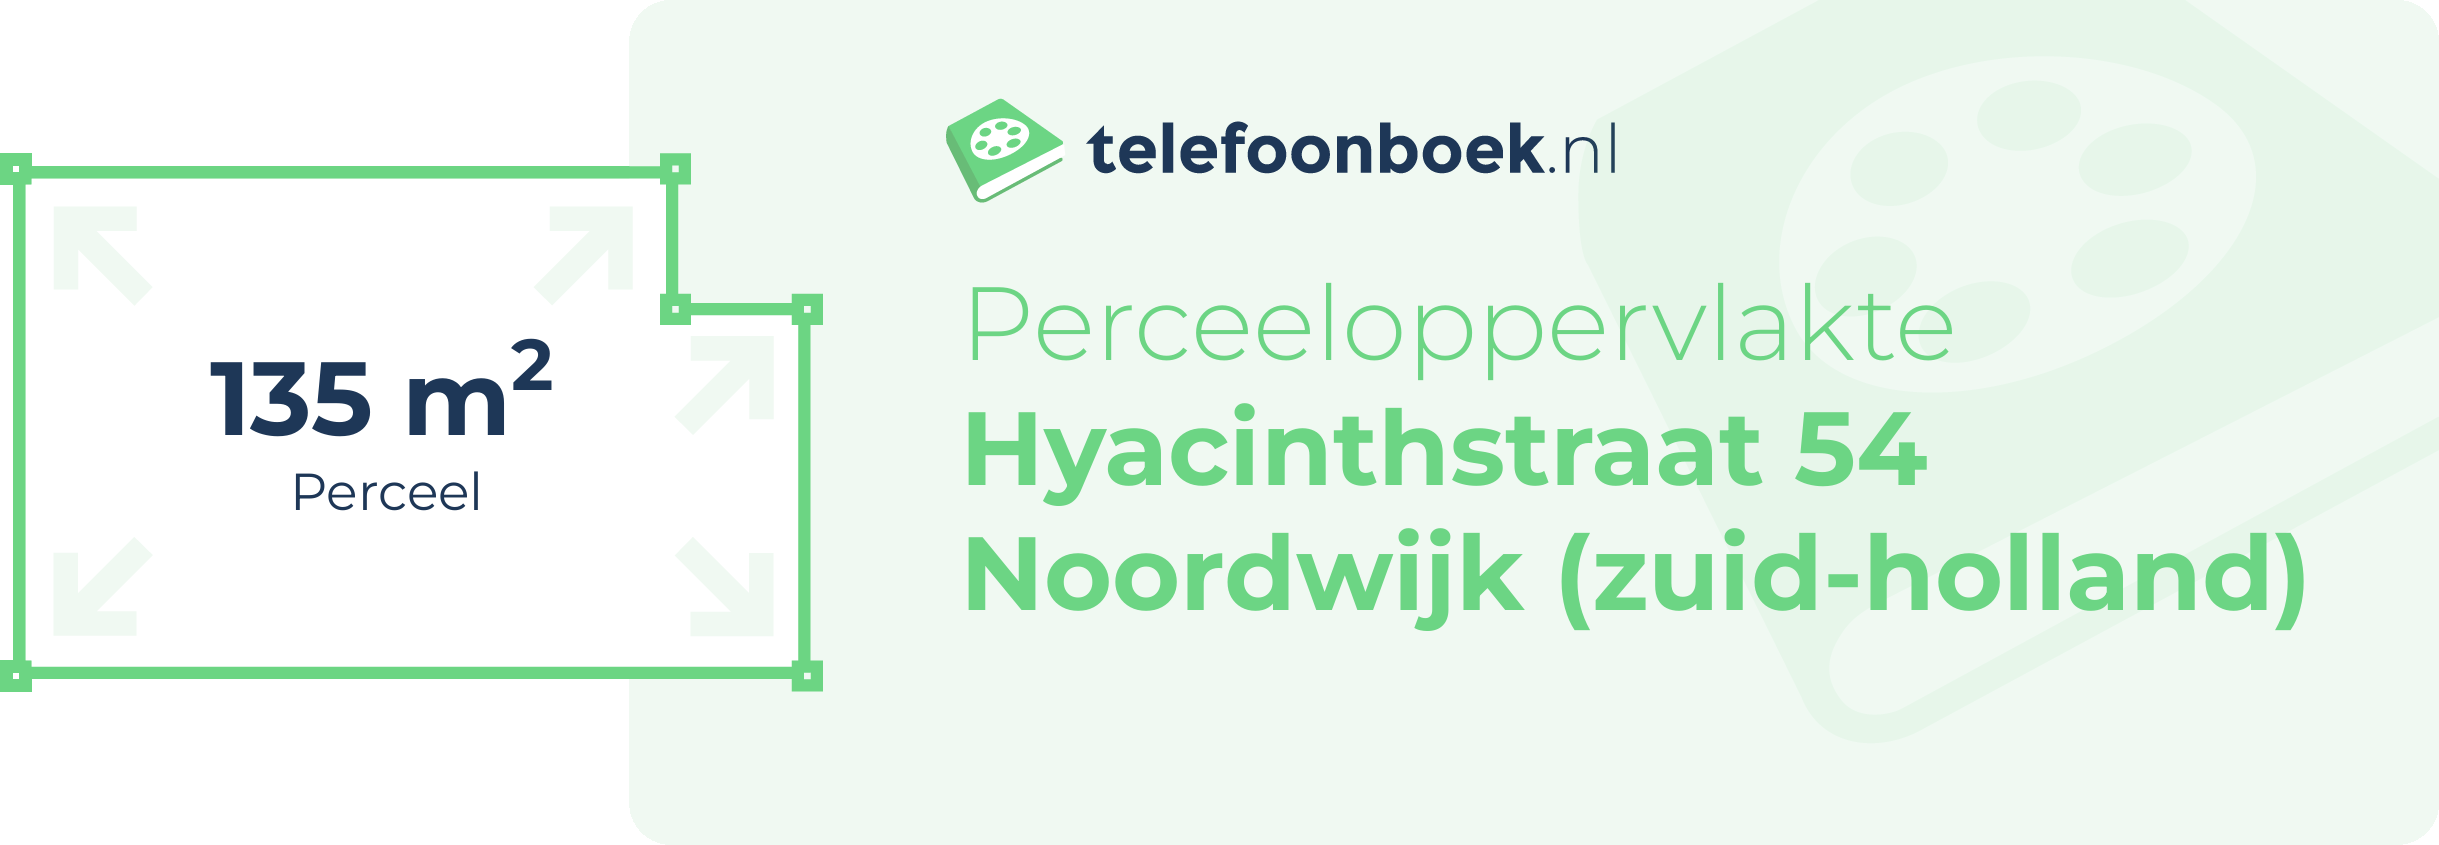 Perceeloppervlakte Hyacinthstraat 54 Noordwijk (Zuid-Holland)